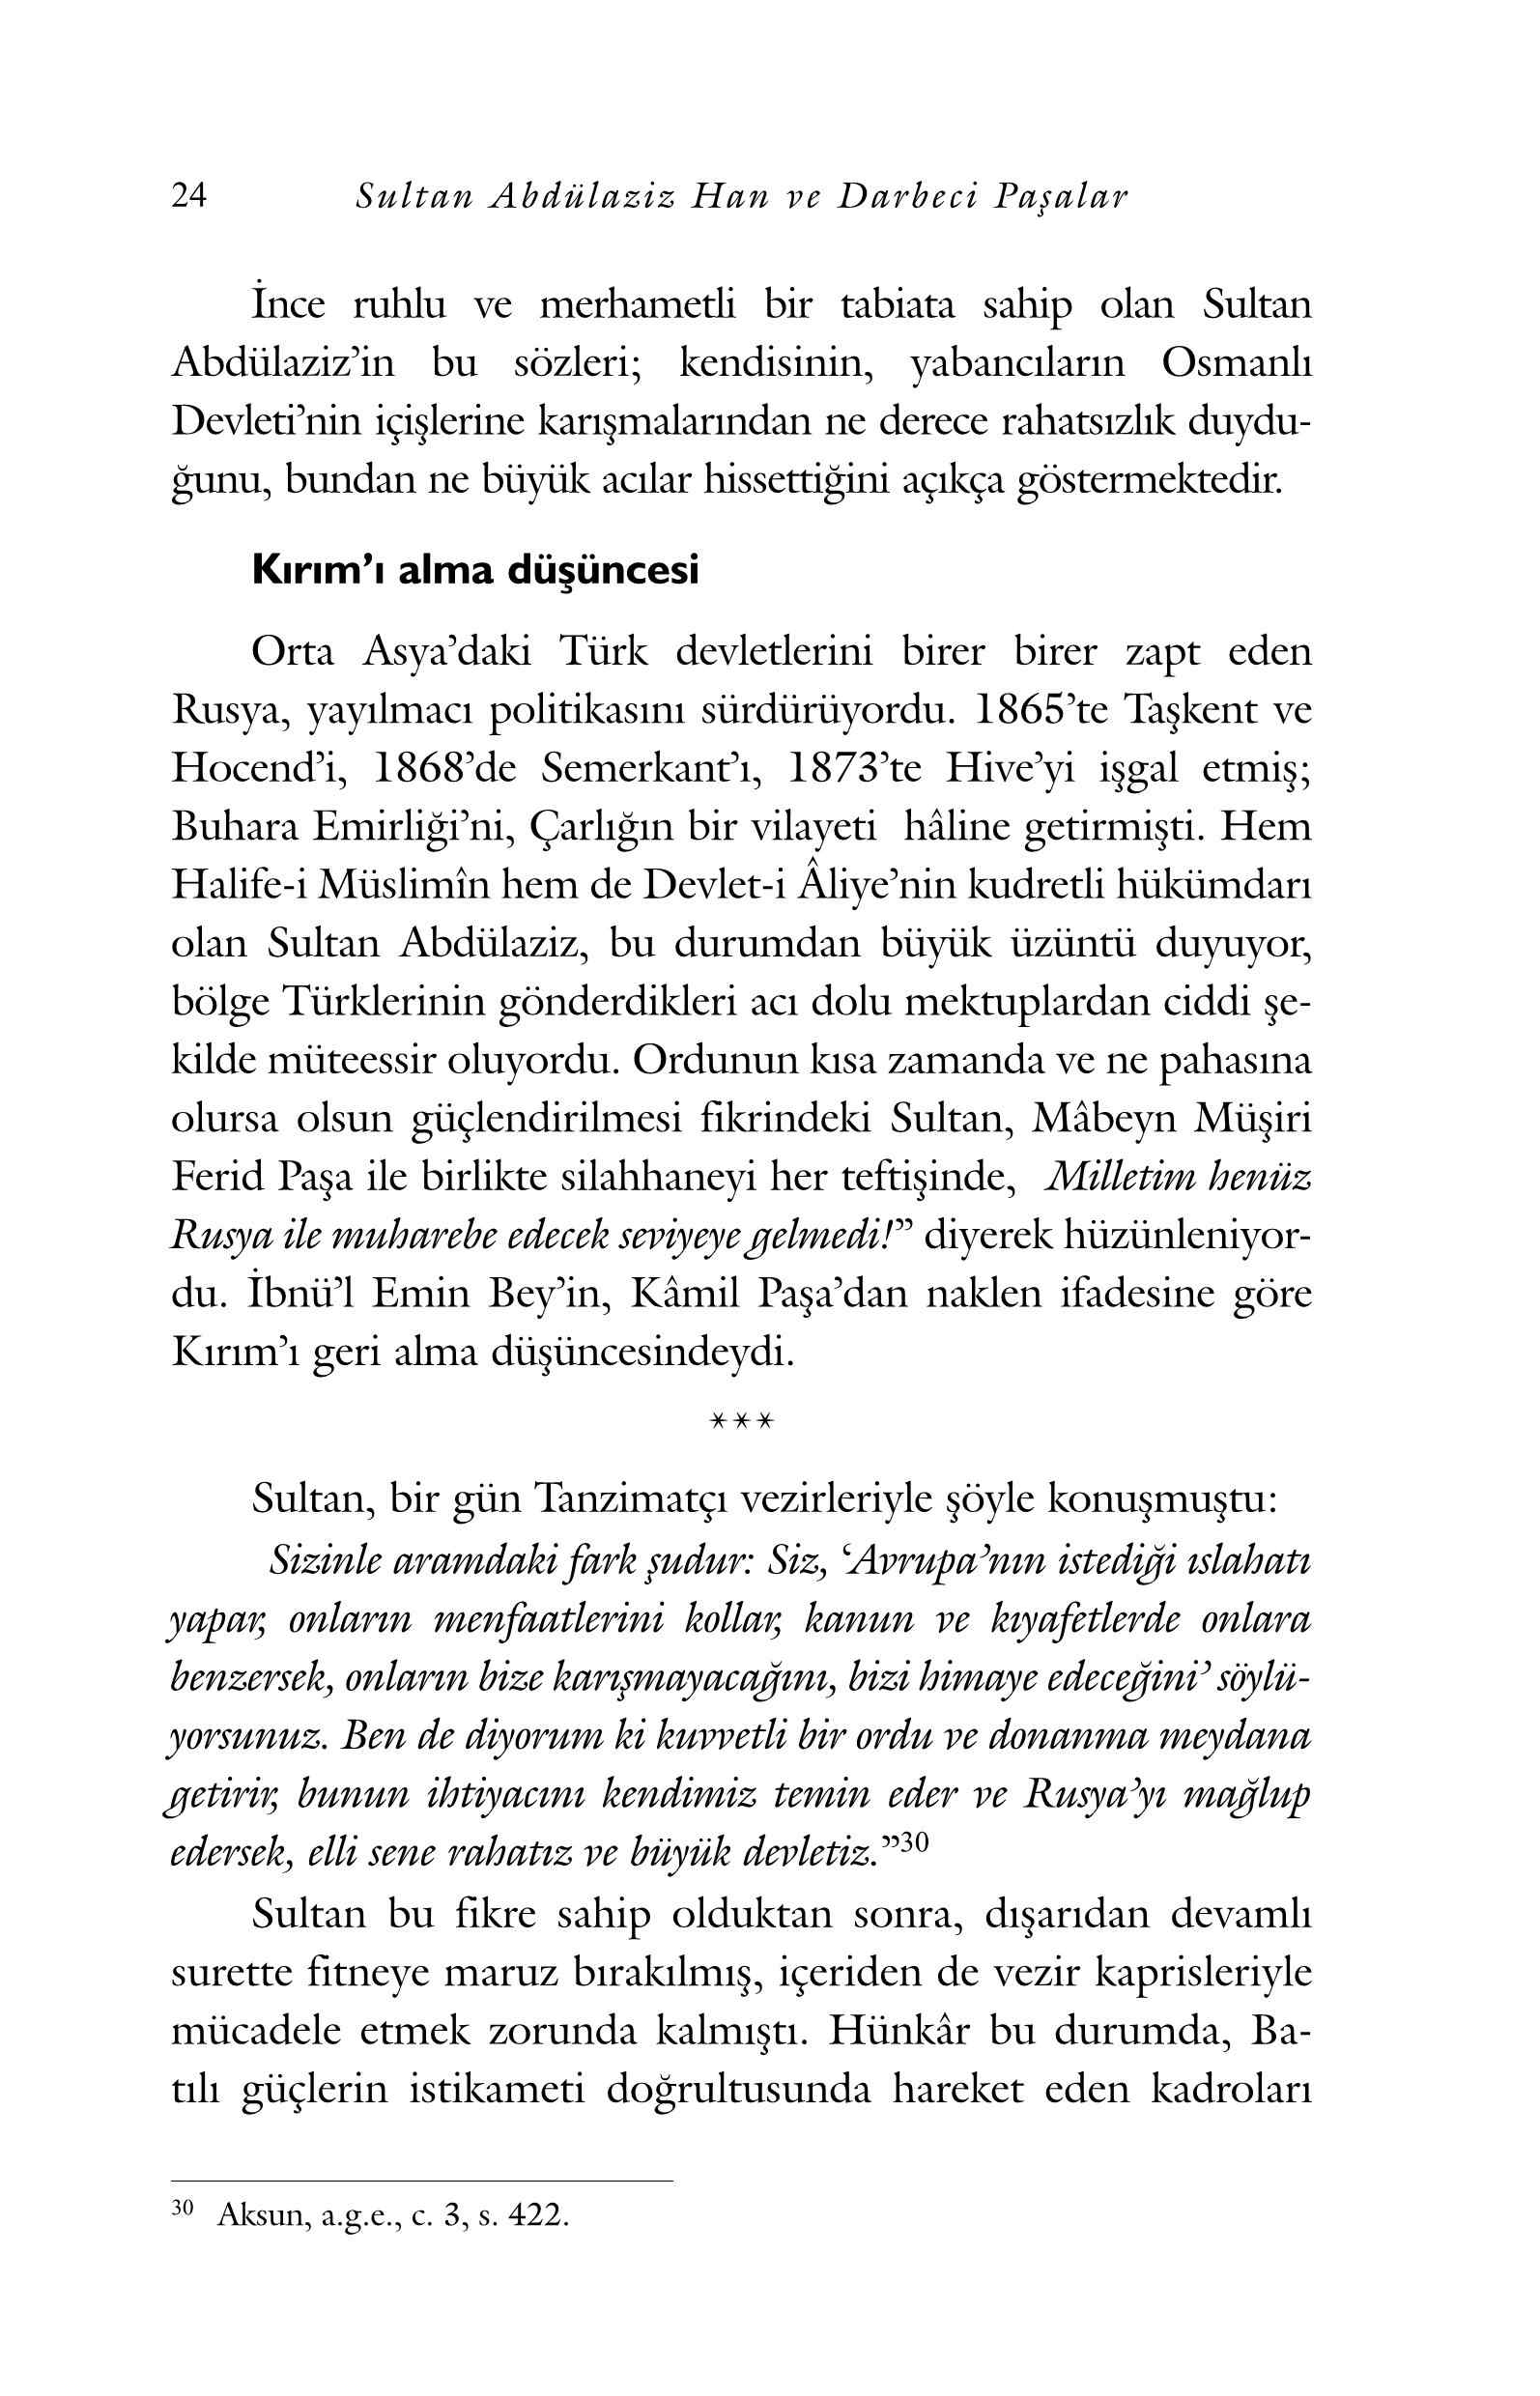 Can Alpguvenc - Sultan Abdülaziz Han ve Darbeci Pasalar - KaynakYayinlari.pdf, 225-Sayfa 